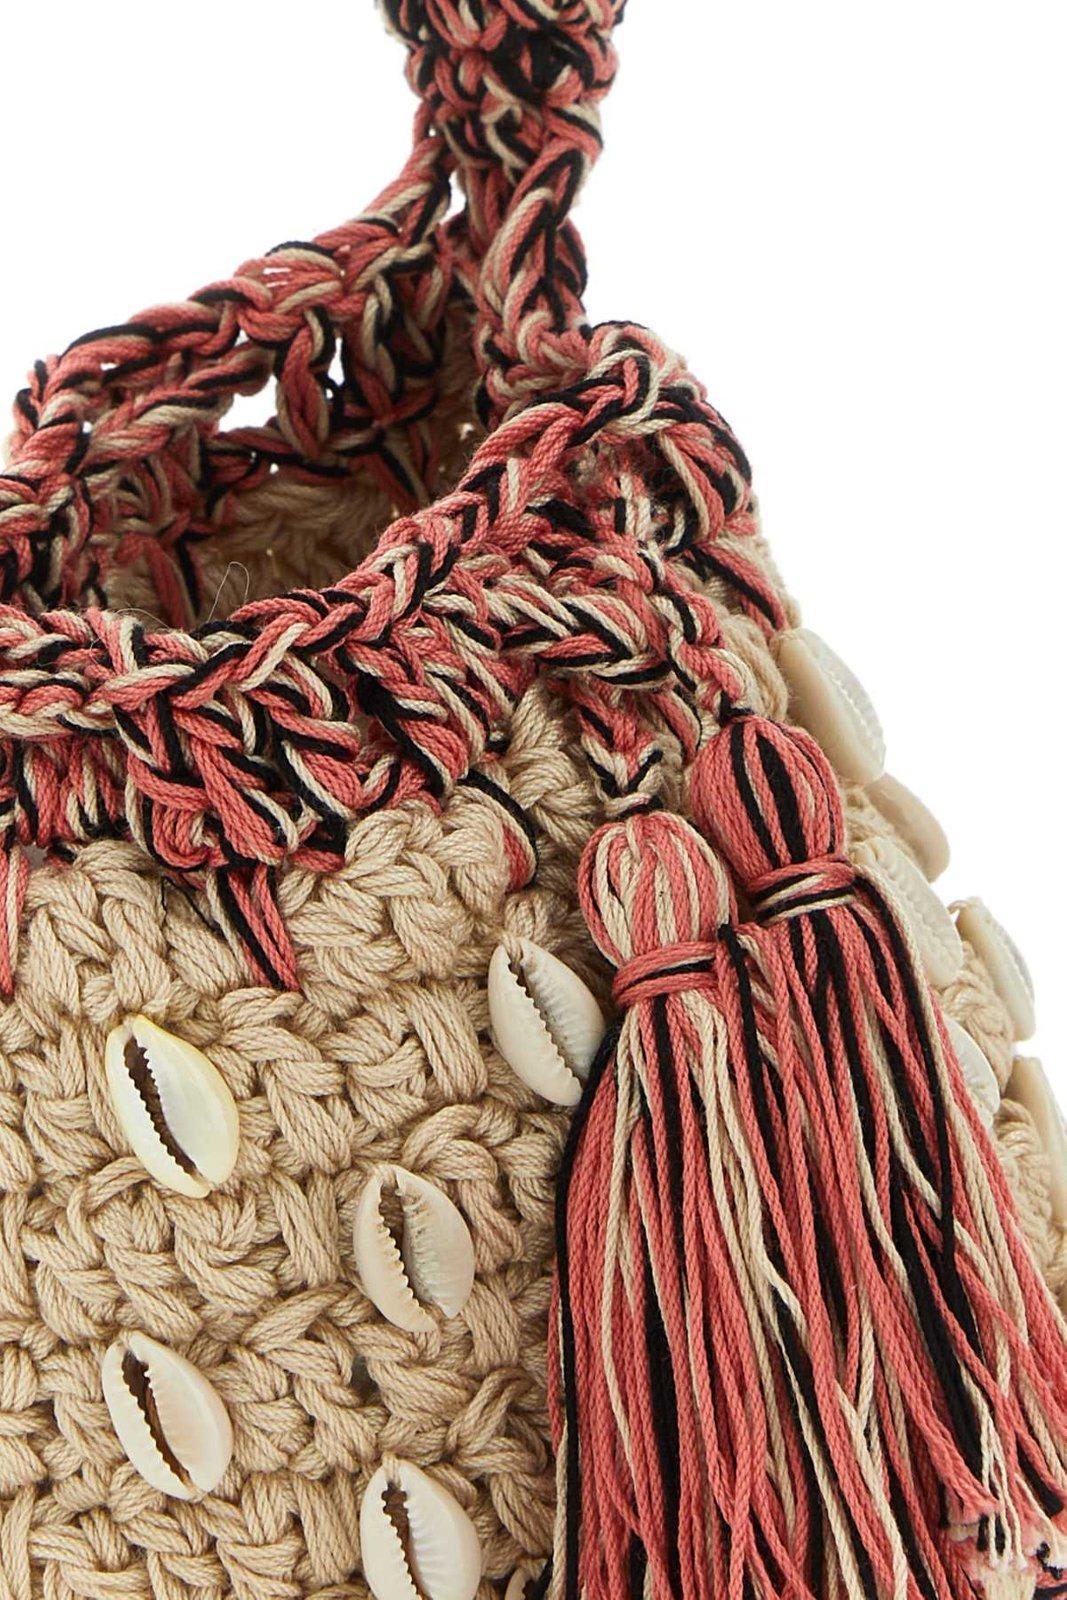 Shop Alanui Crochet Mini Handbag In Beige